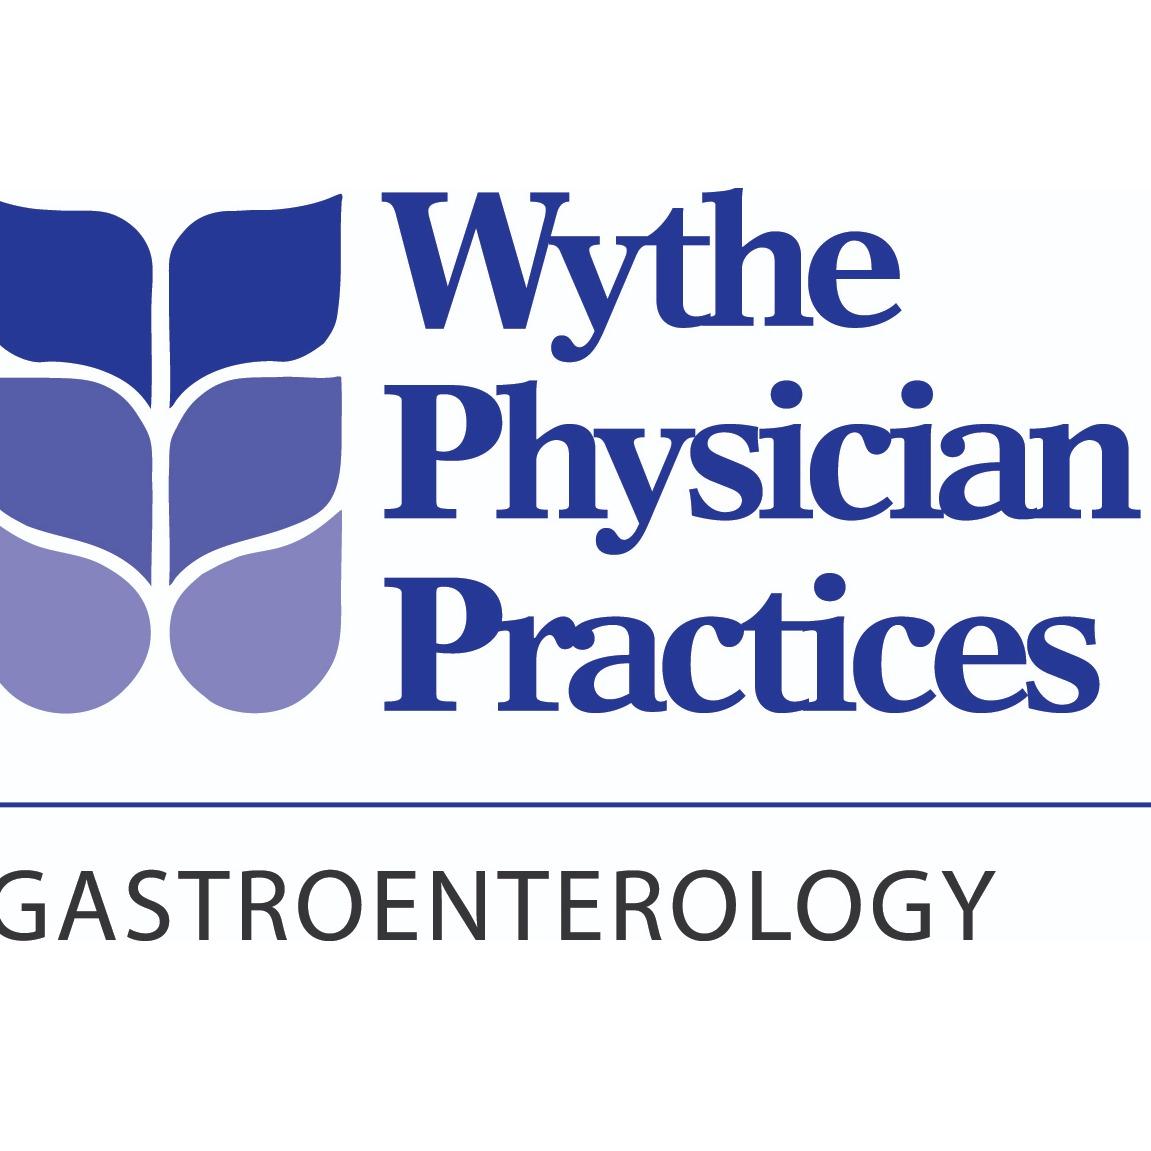 Wythe Physician Practices - Gastroenterology Logo